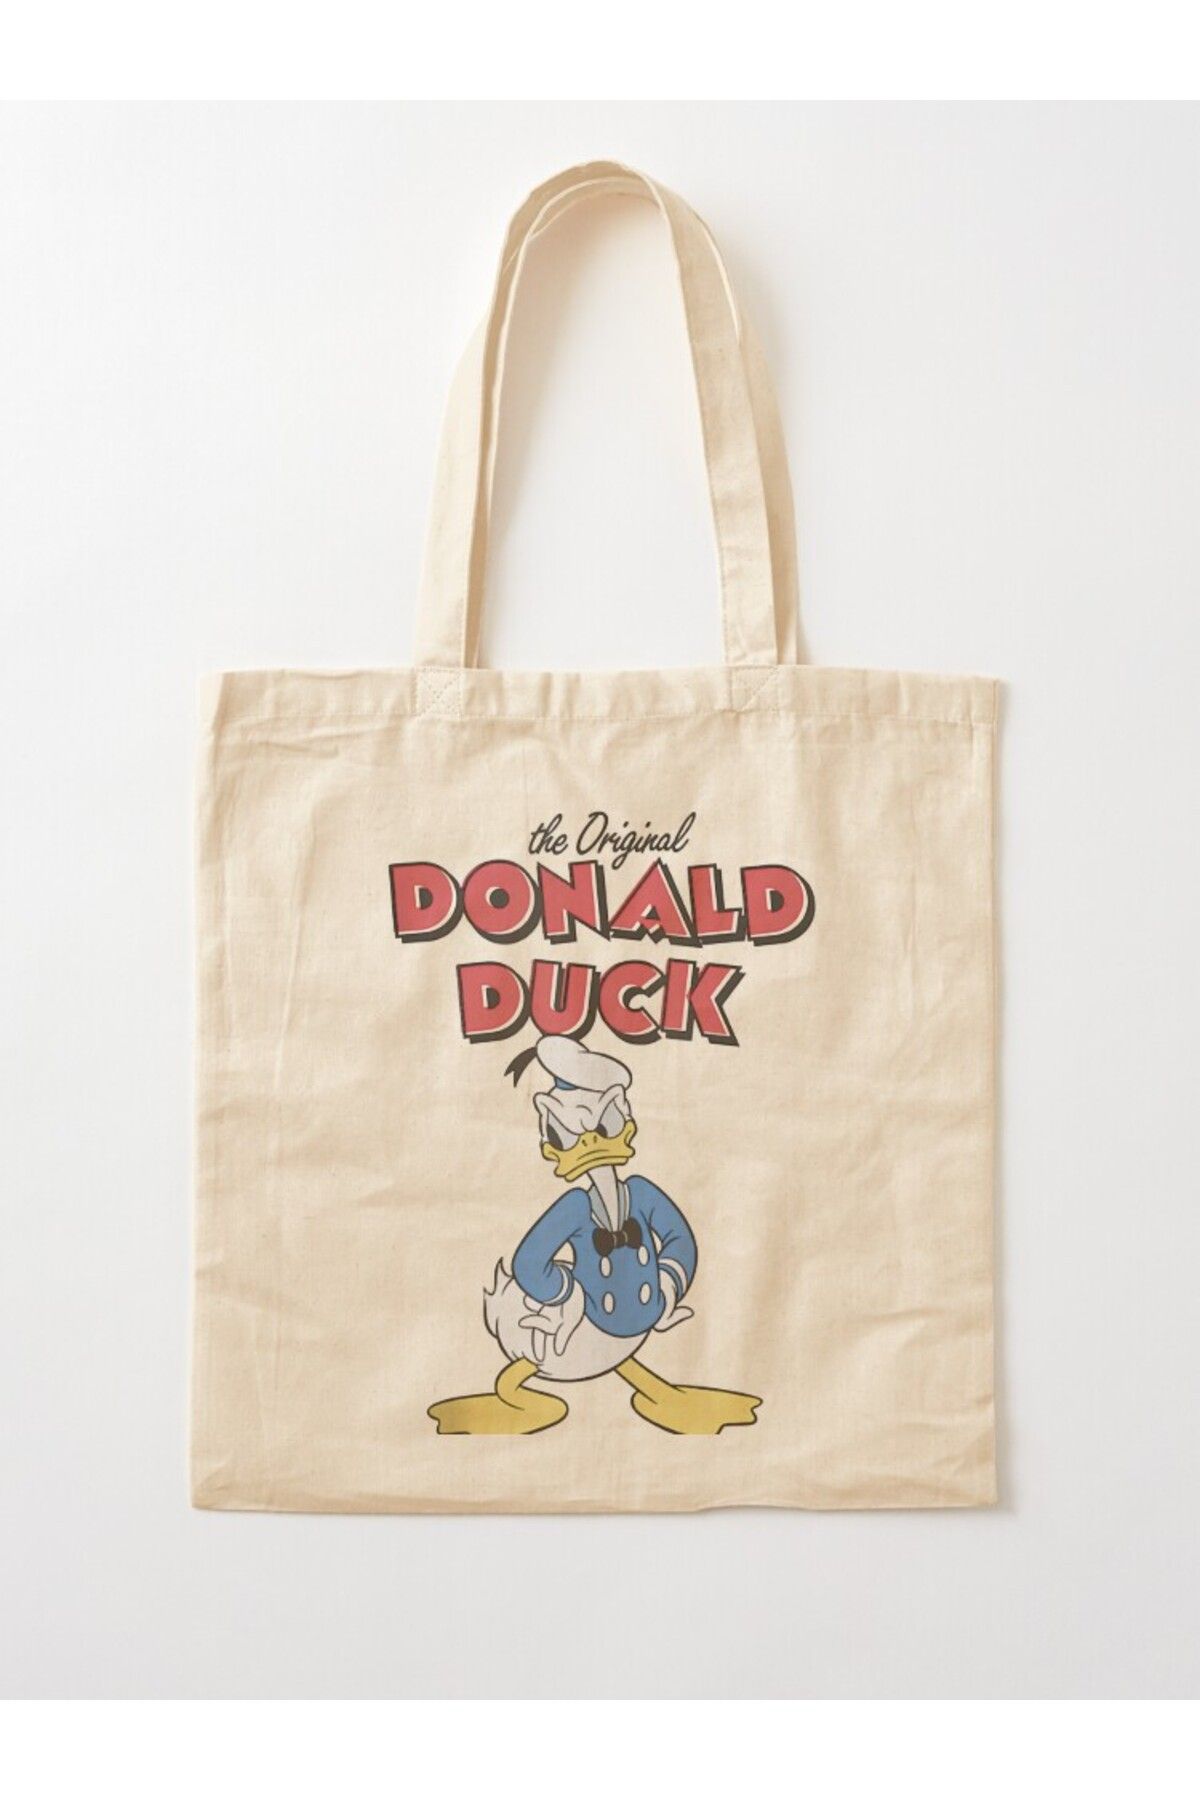 w house Körüklü Bez Omuz Çantası 20442 - Gifts Movies Dis.ney Mic.key And Friends Donald Duck The Original